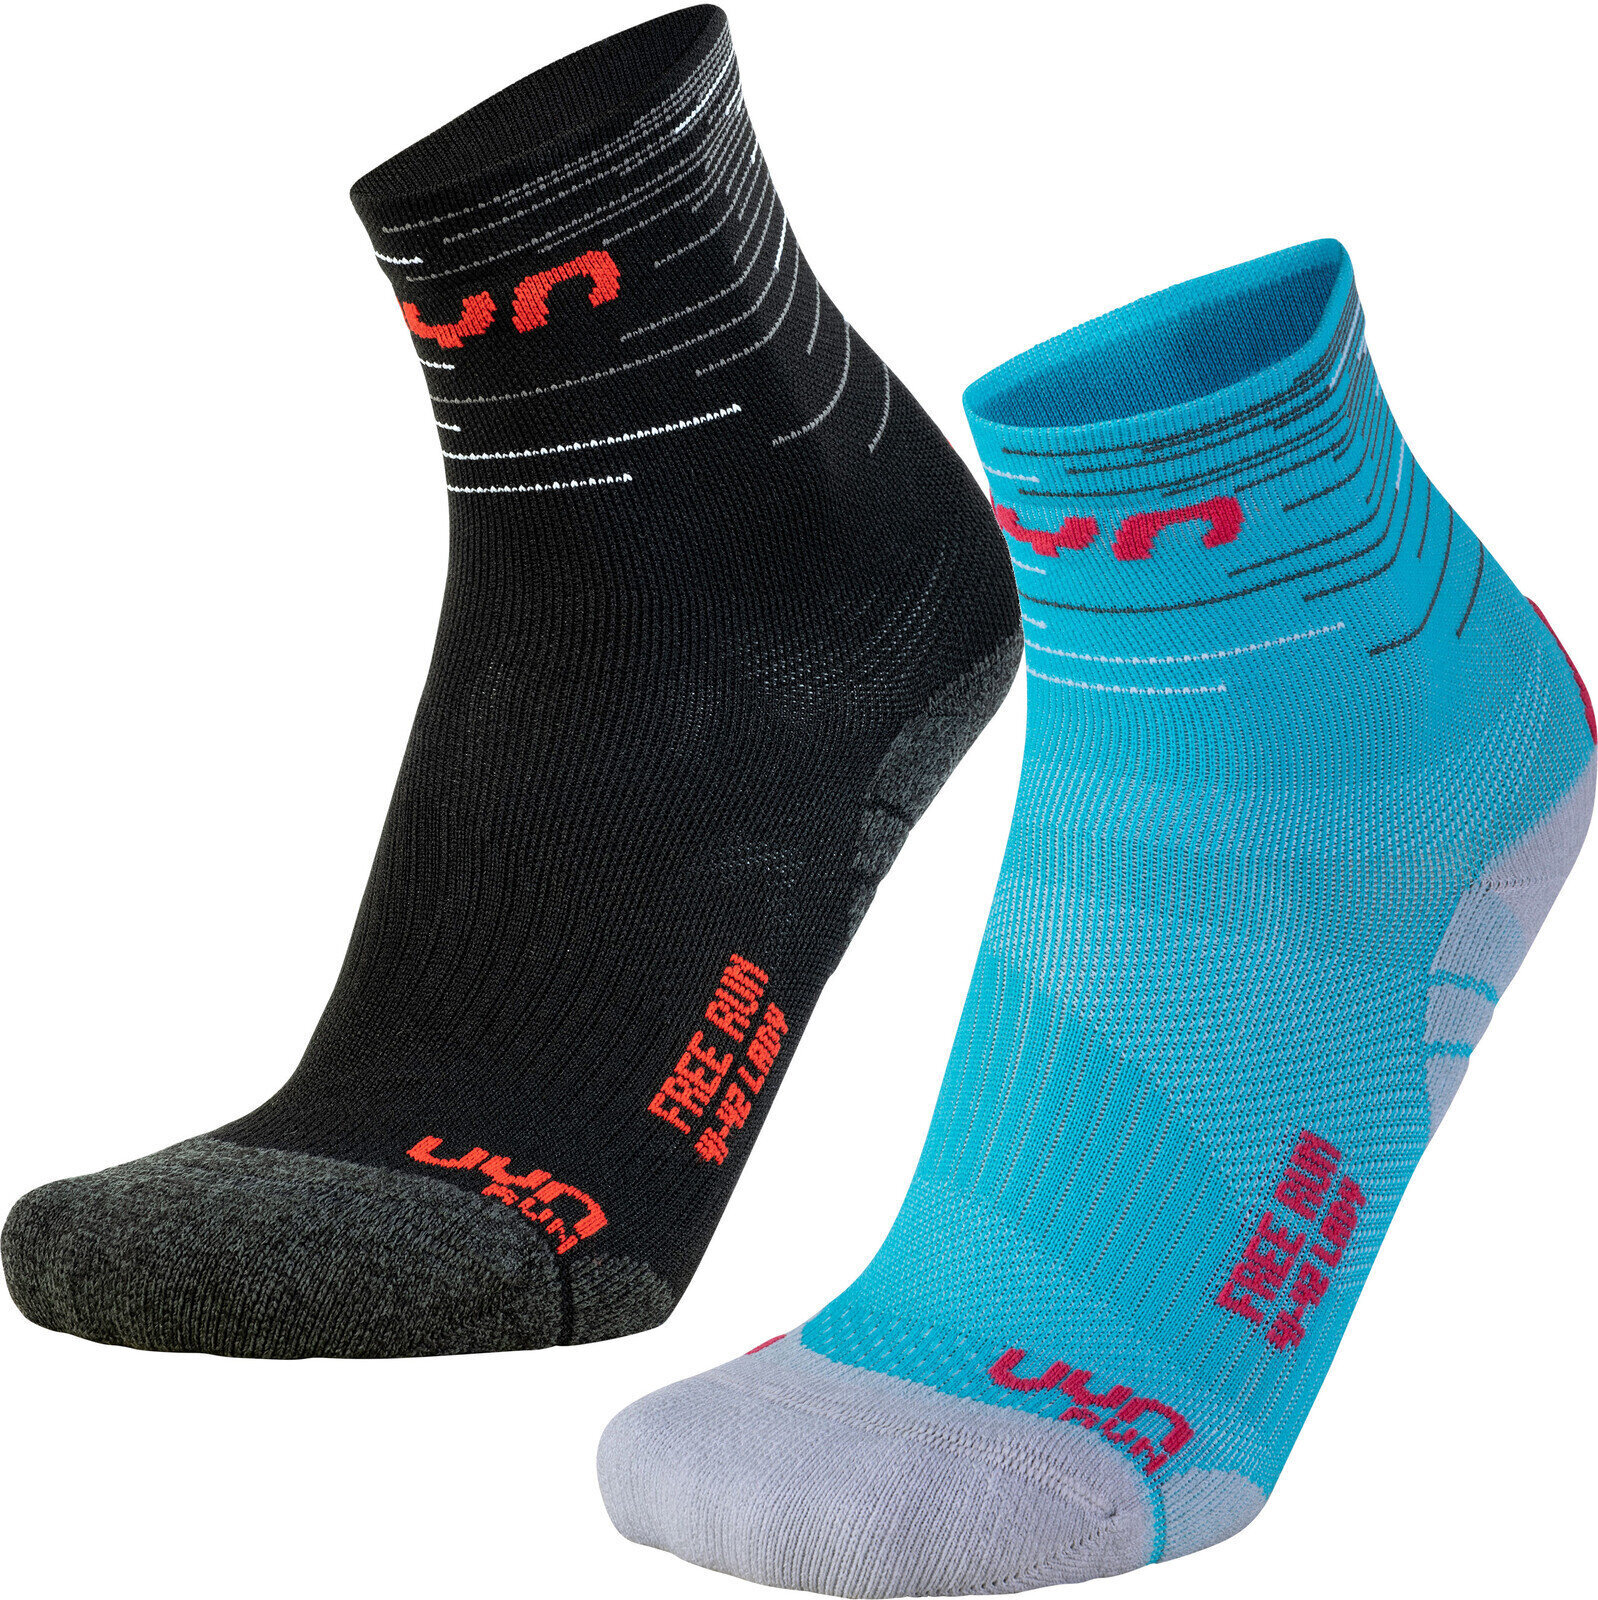 Skarpety do biegania
 UYN Free Run Socks 2 Pairs Turquoise-Czarny 37/38 Skarpety do biegania